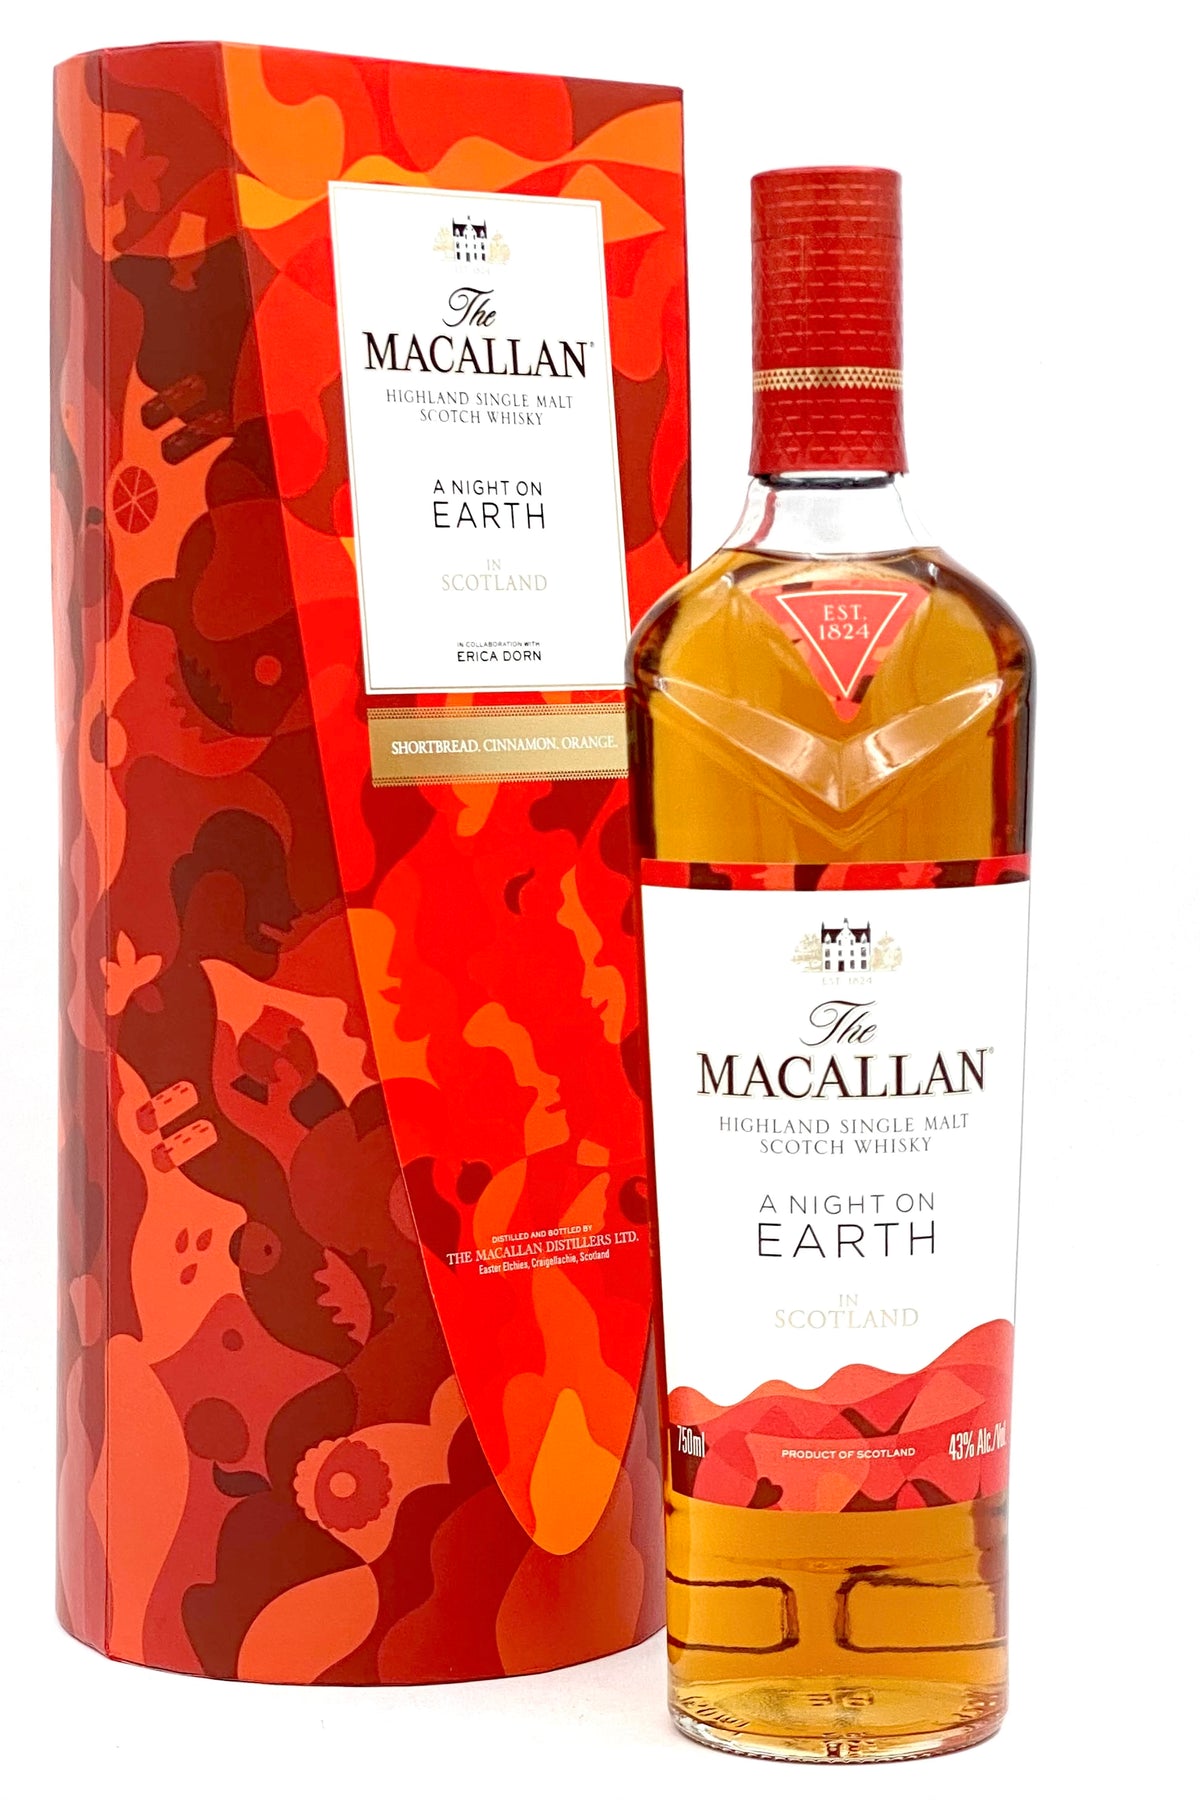 Macallan A Night on Earth Single Malt Scotch Whisky